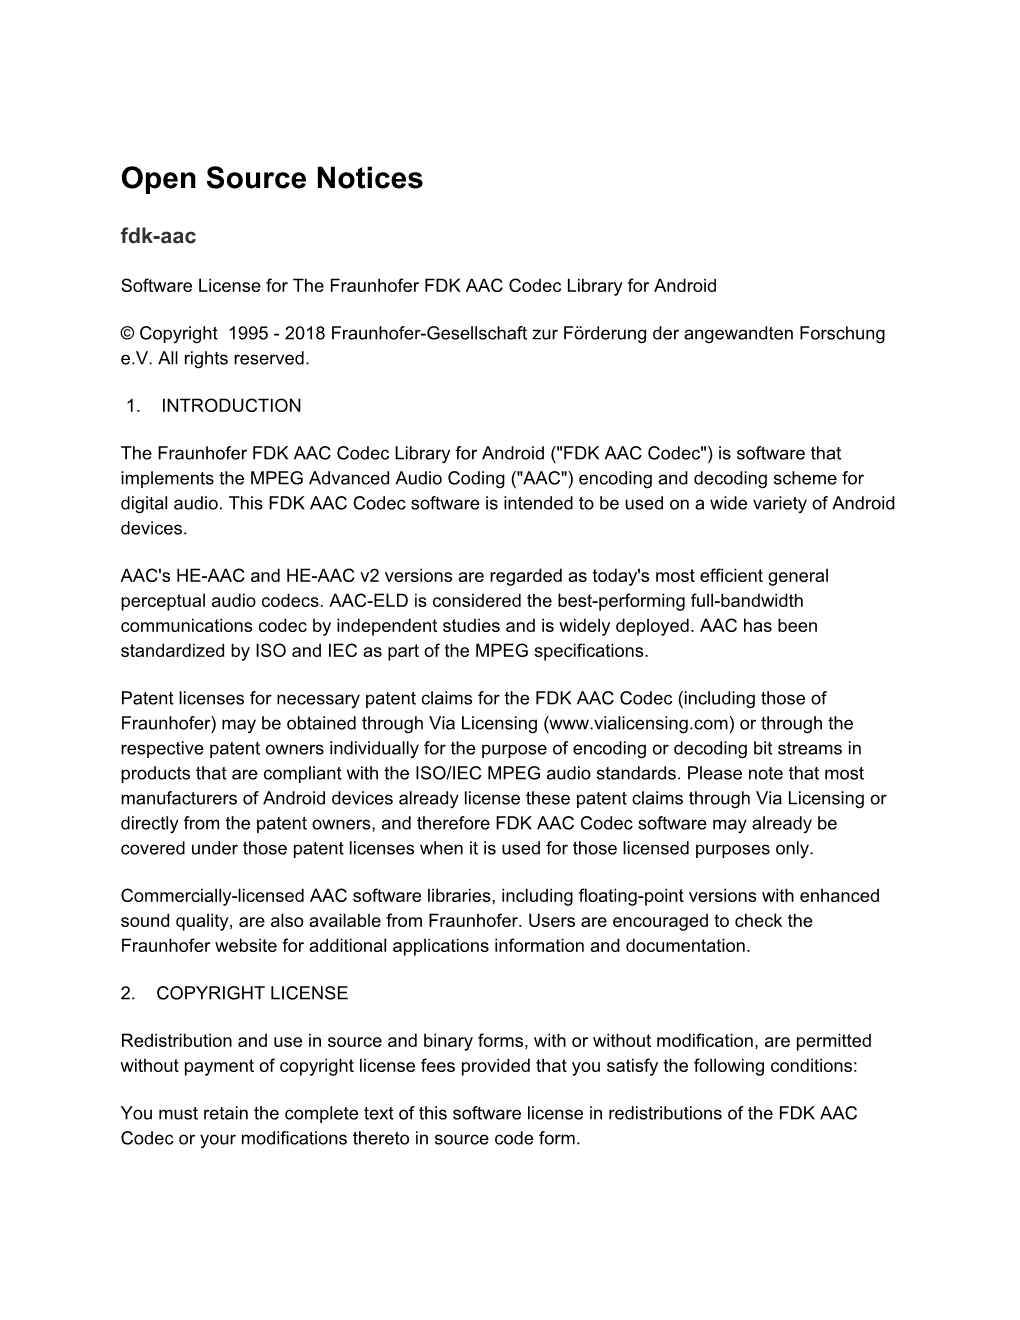 Open Source Notices Fdk-Aac